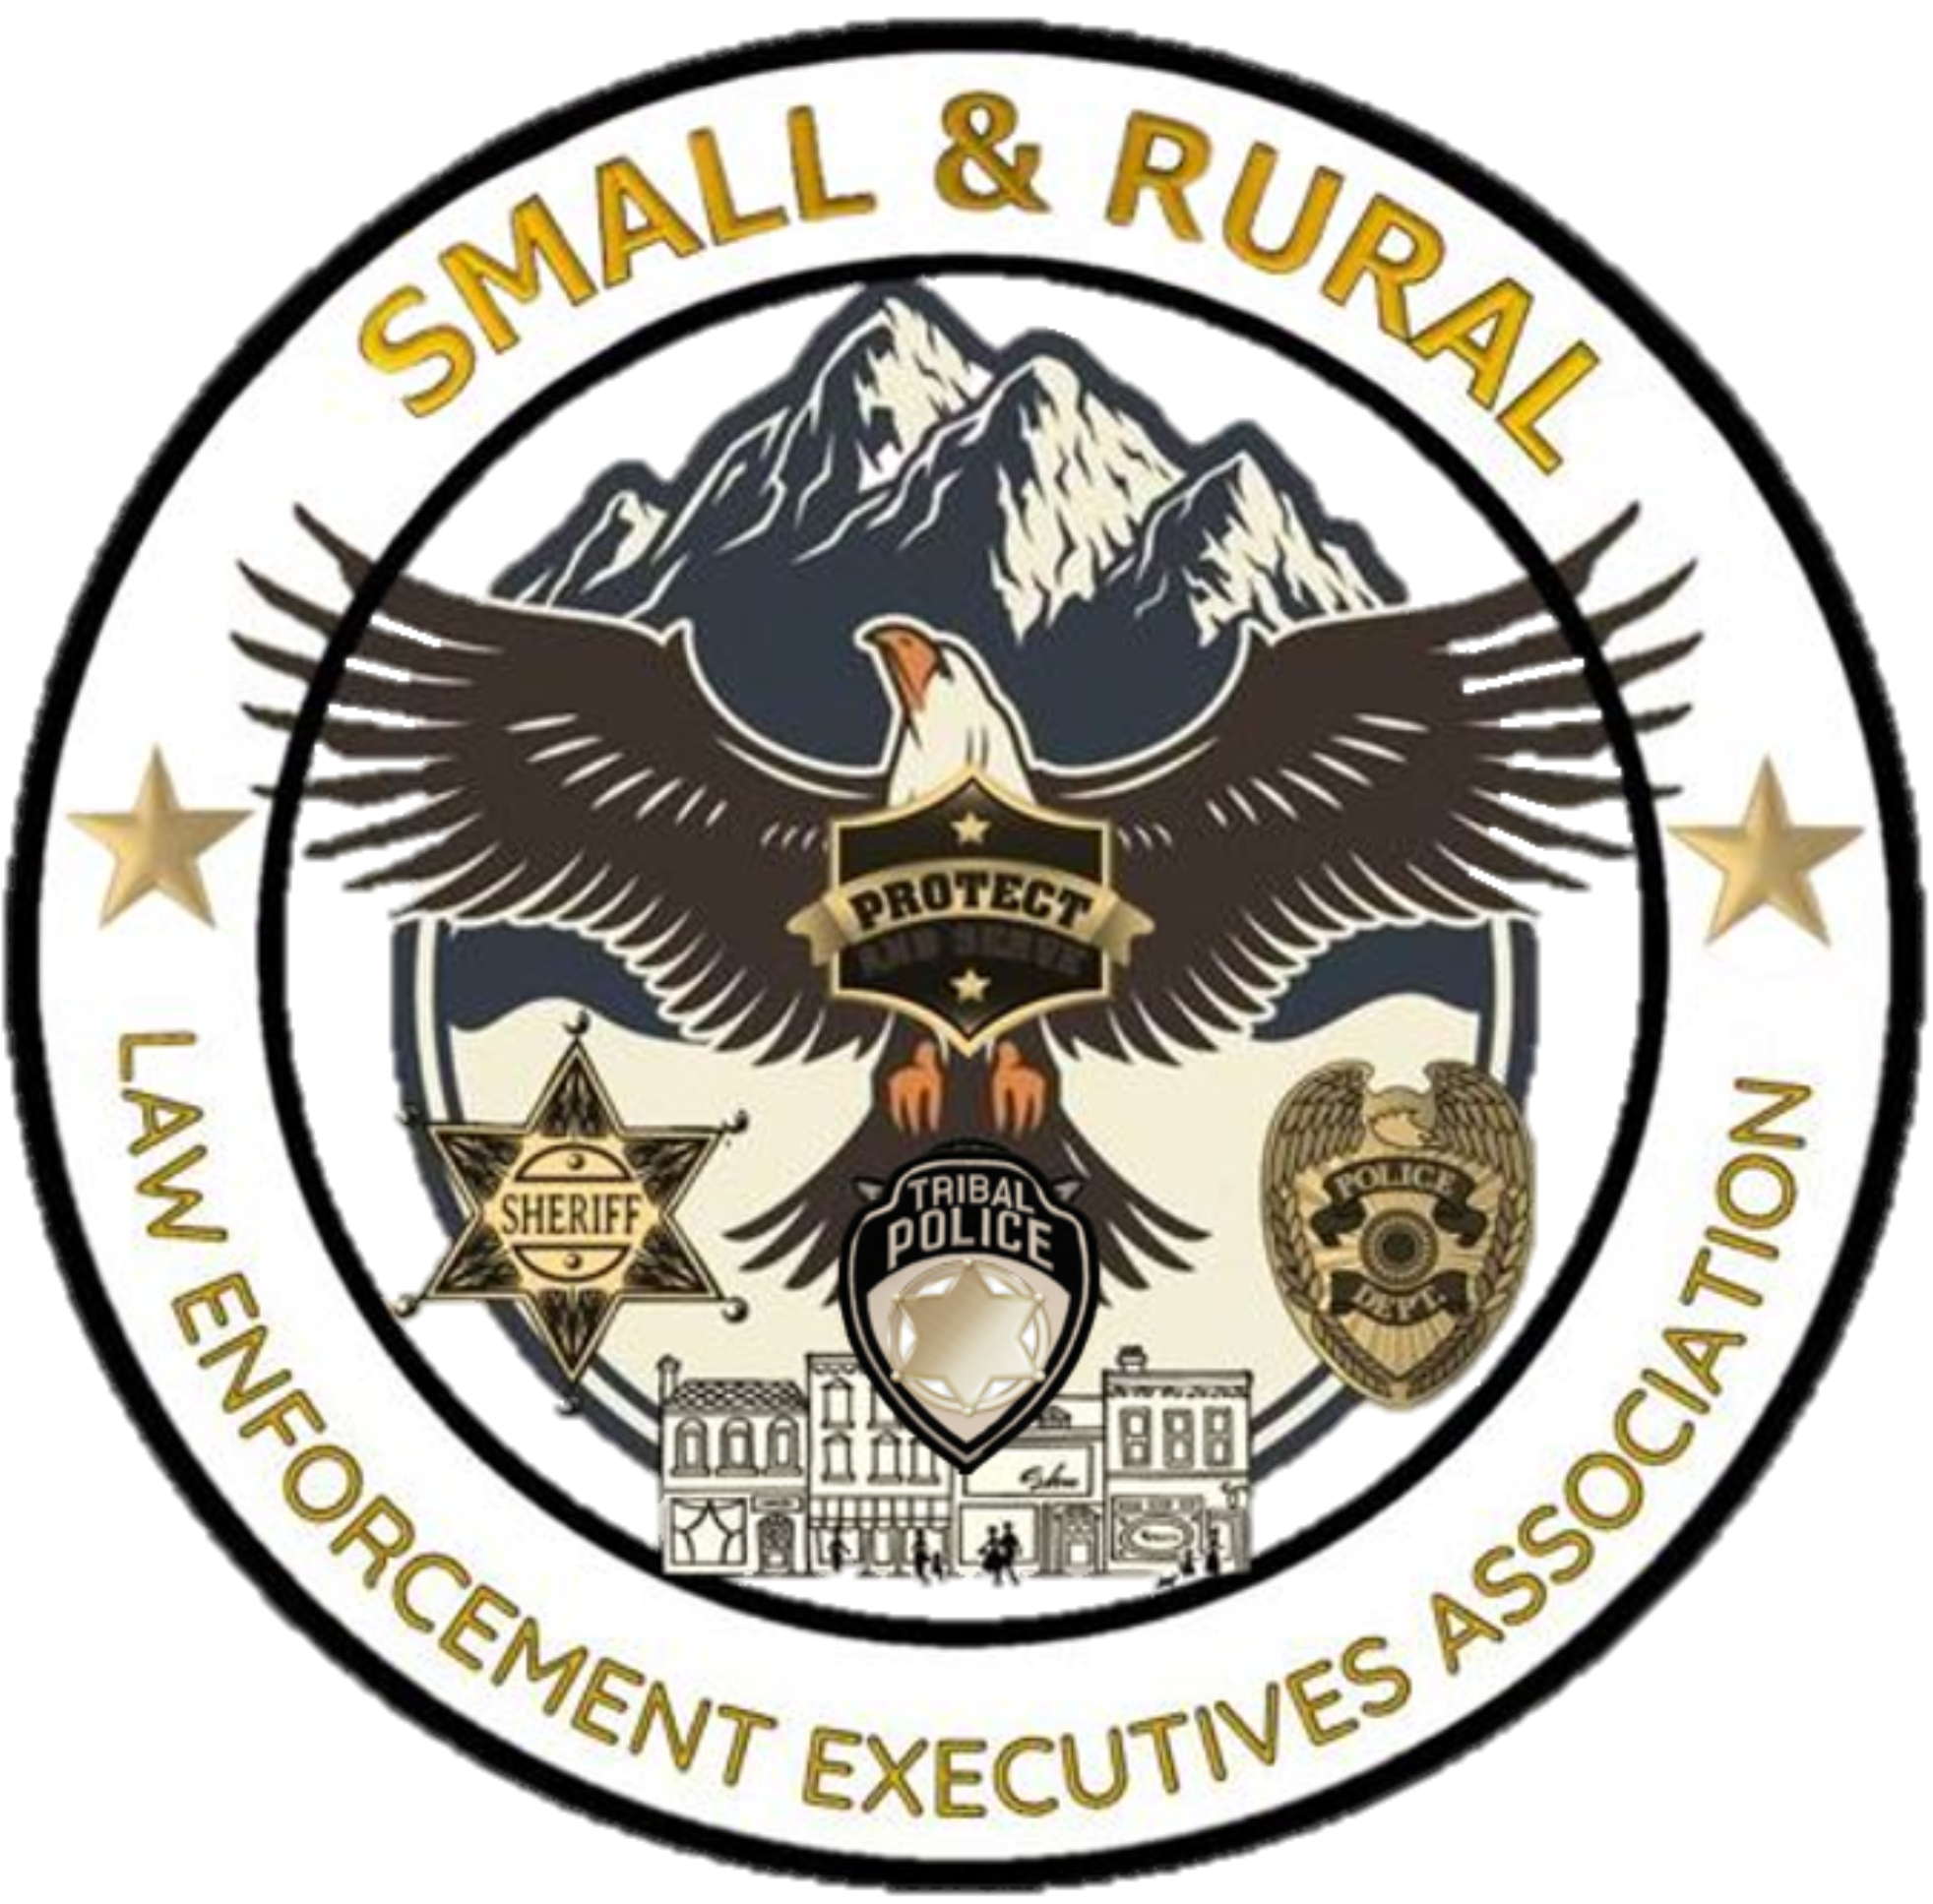 Small & Rural Law Enforcement Executives Association logo